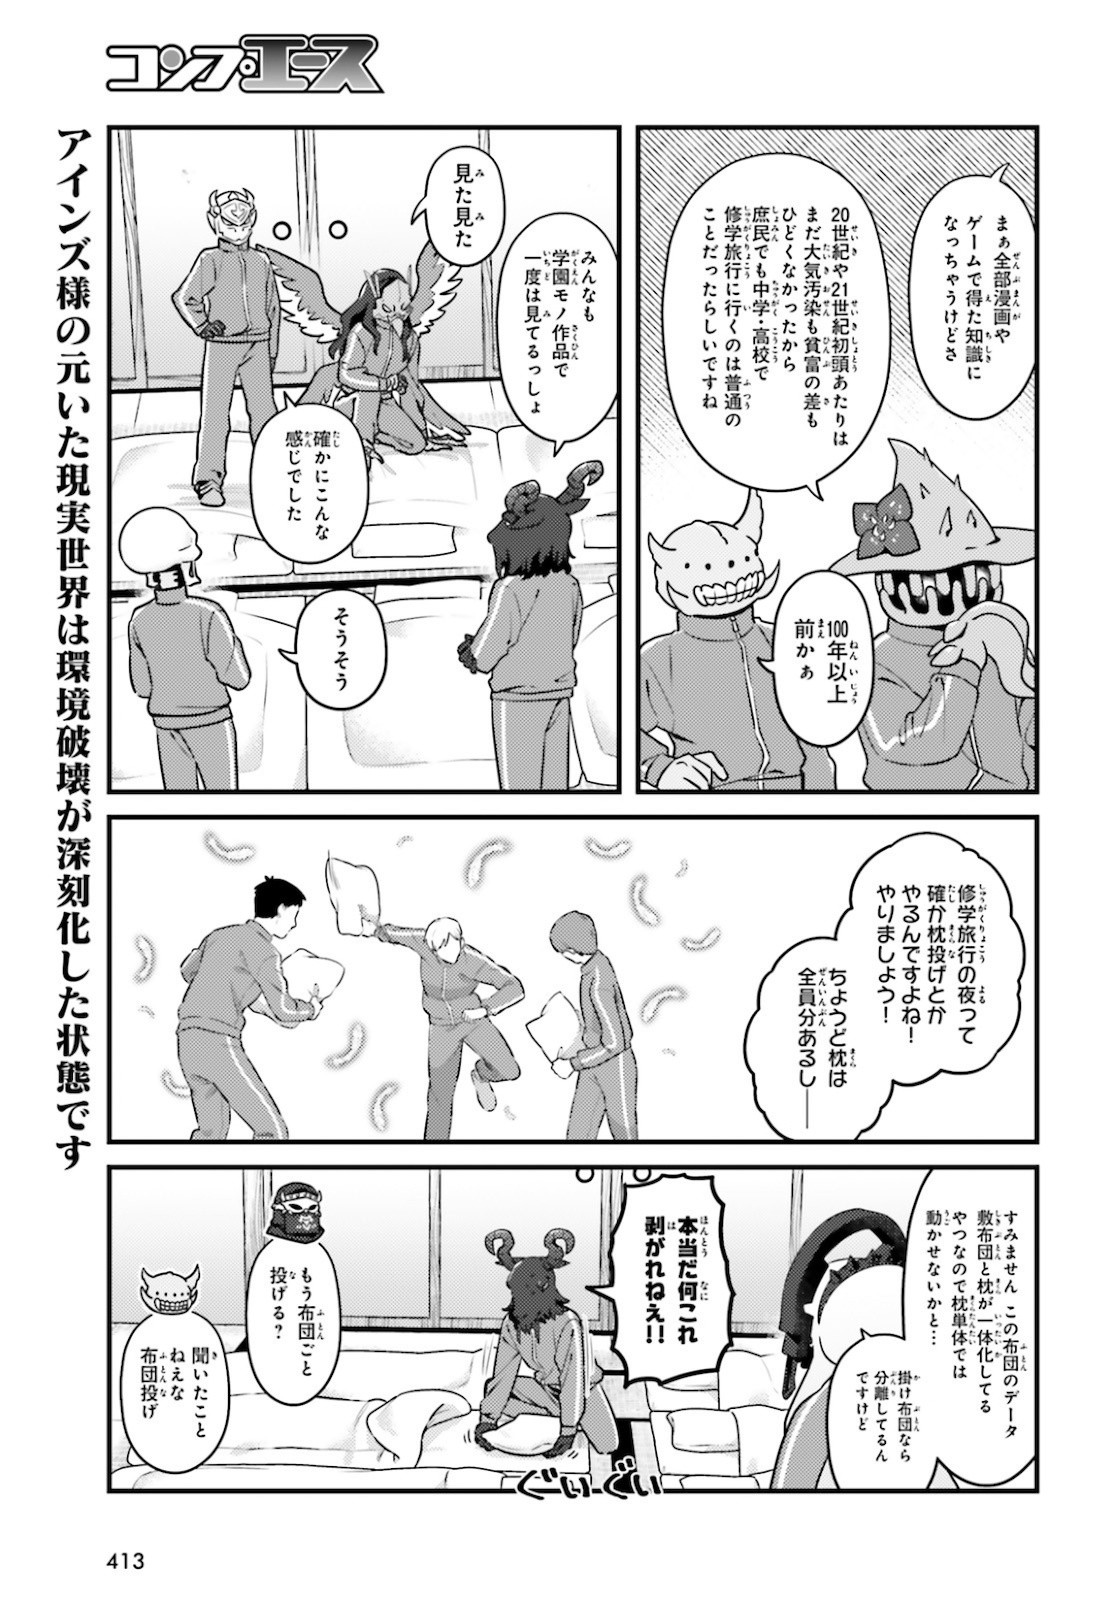 Overlord-Fushisha-no-Oh - Chapter 47 - Page 5